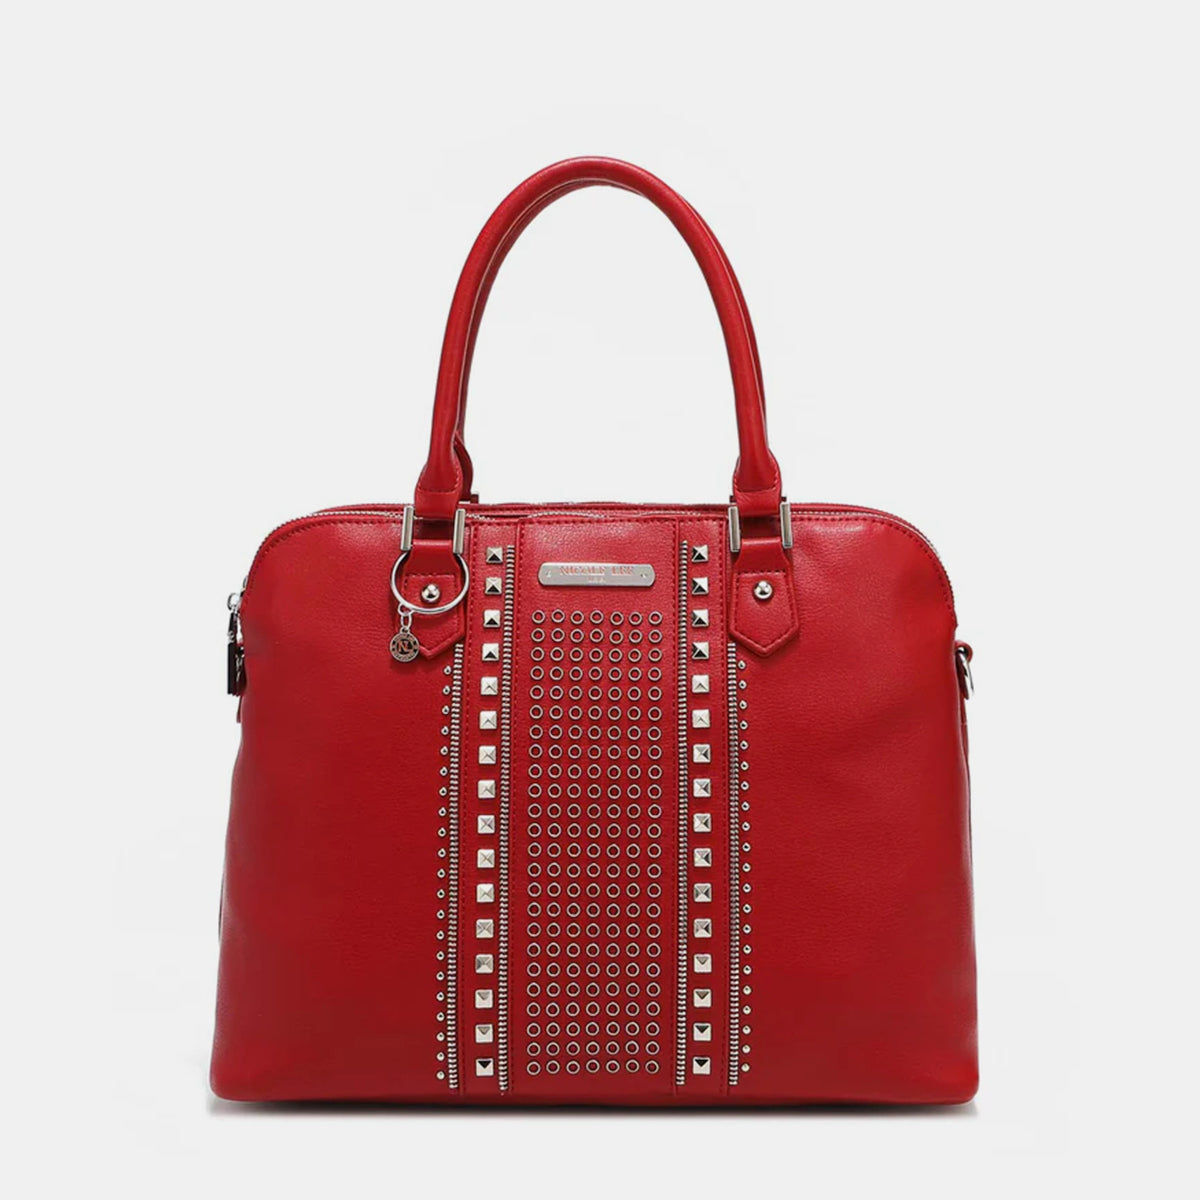 TEEK- NL Studded Decor Handbag BAG TEEK Trend Red  